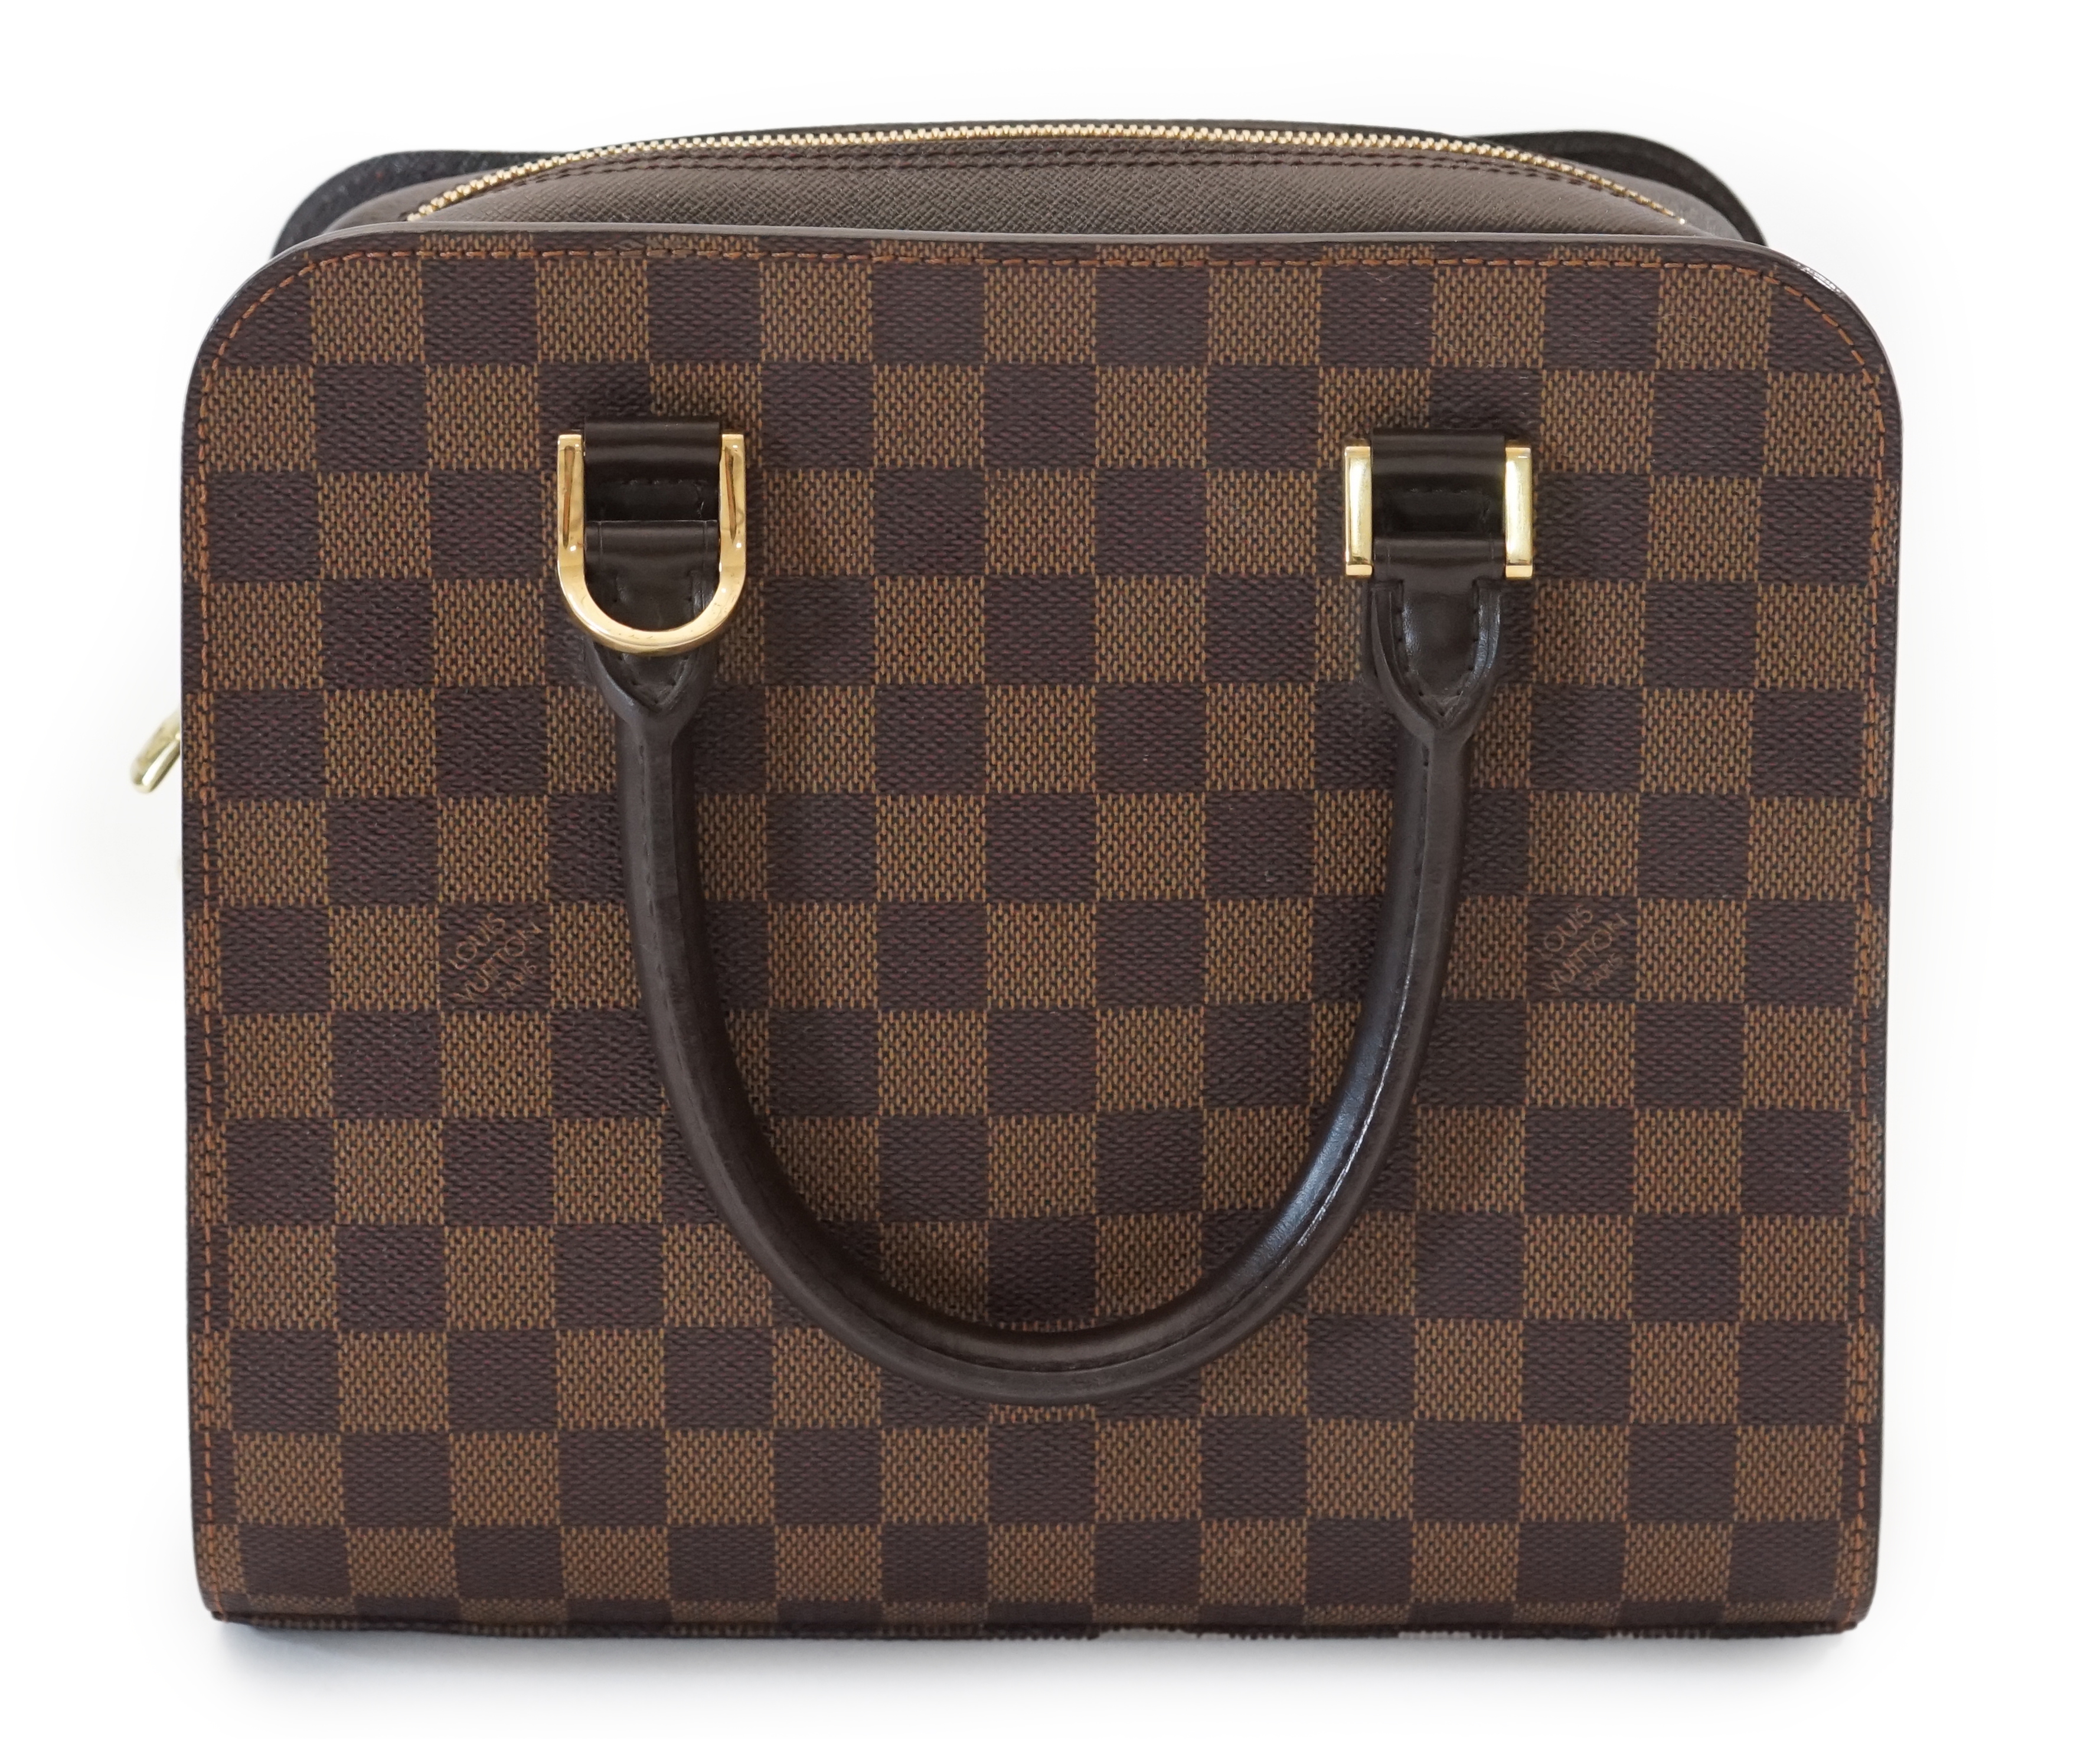 A Louis Vuitton Triana handbag, styled in Damier canvas width 26cm, depth 12cm, height 22cm handle 11cm